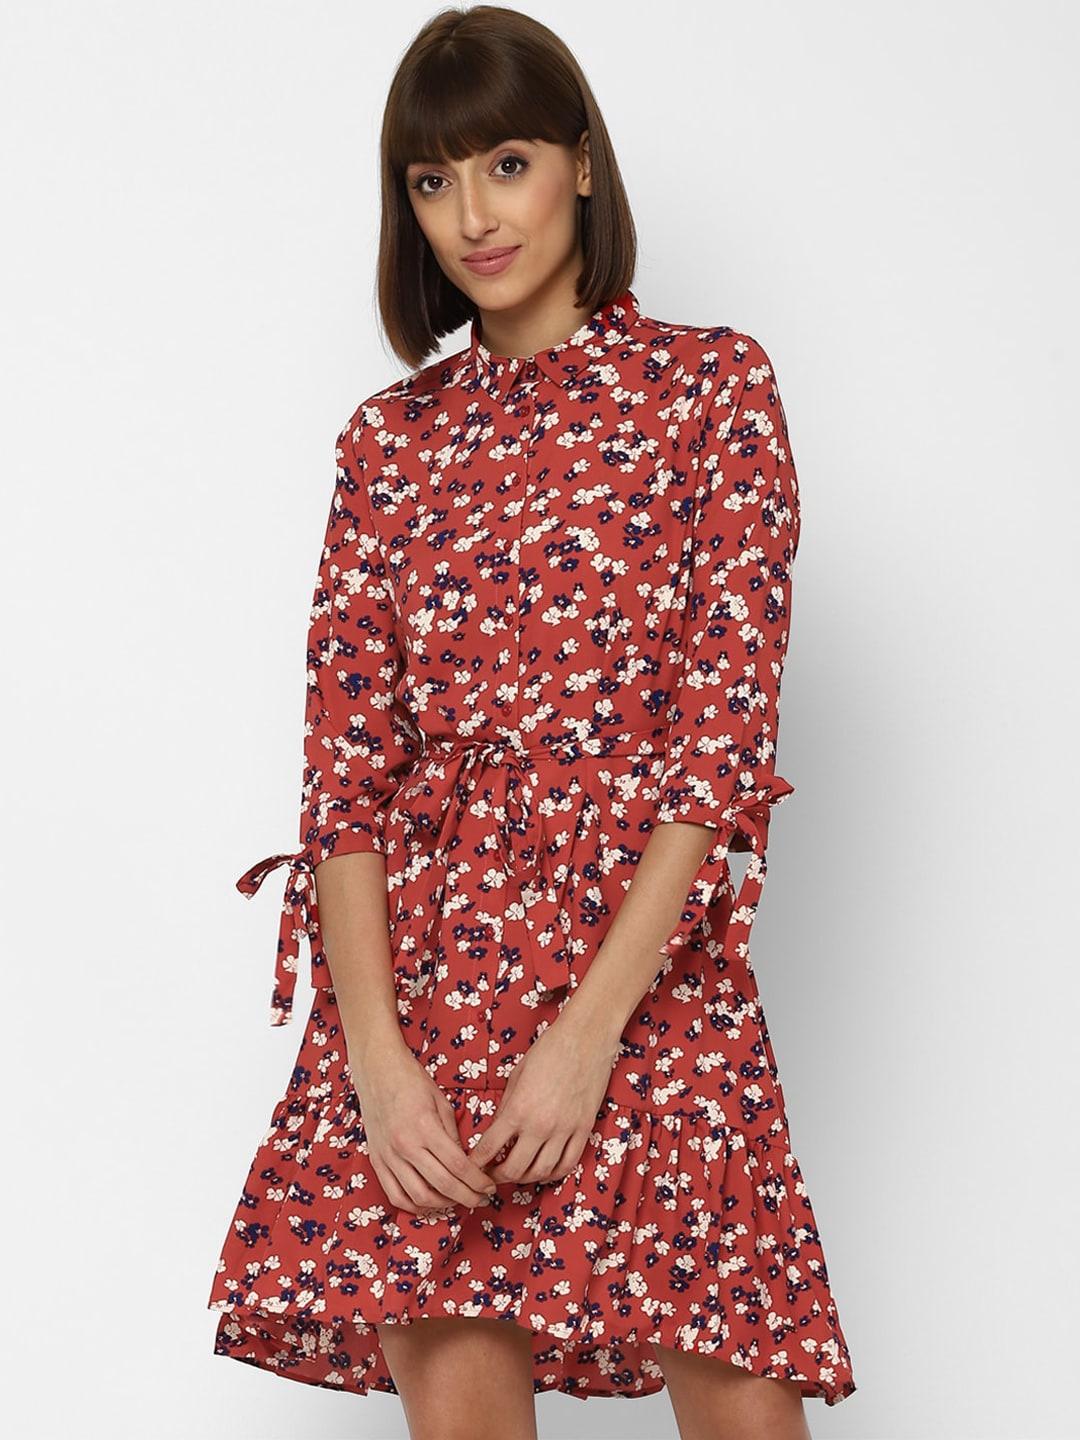 allen solly woman maroon floral shirt dress